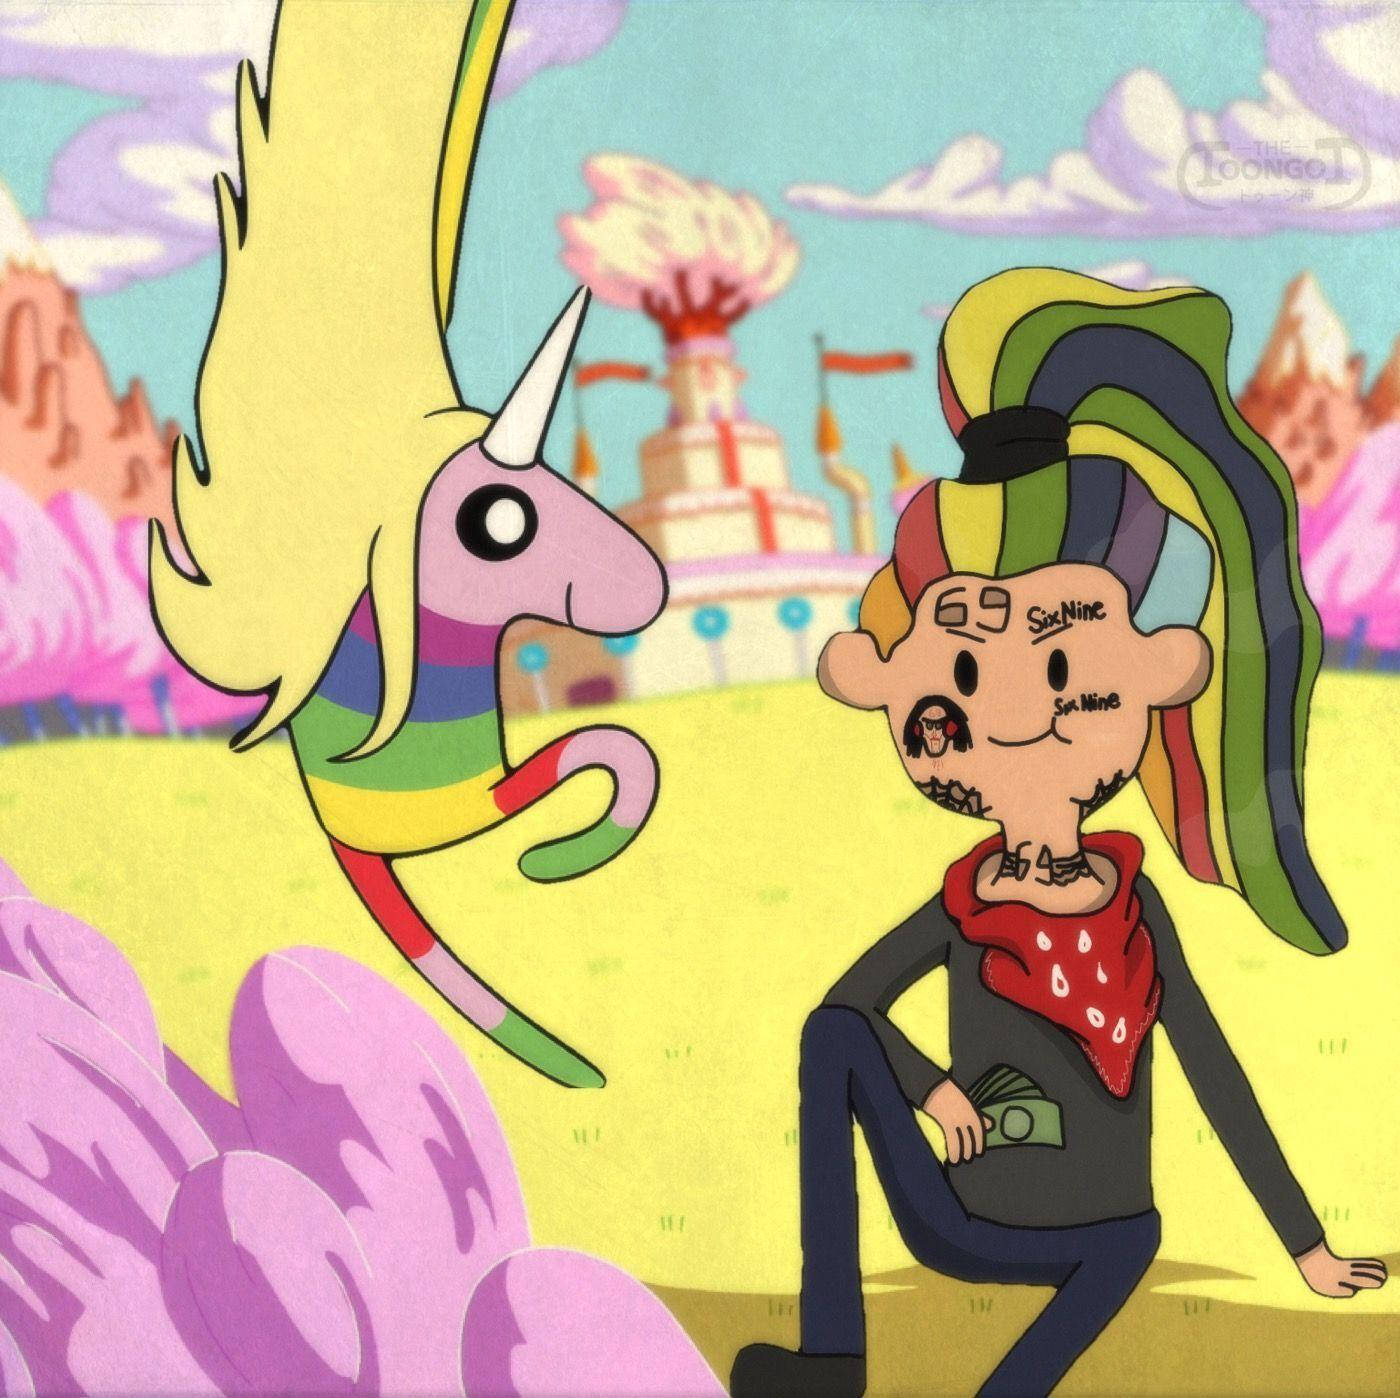 6ix9ine As A Cartoon Character Background